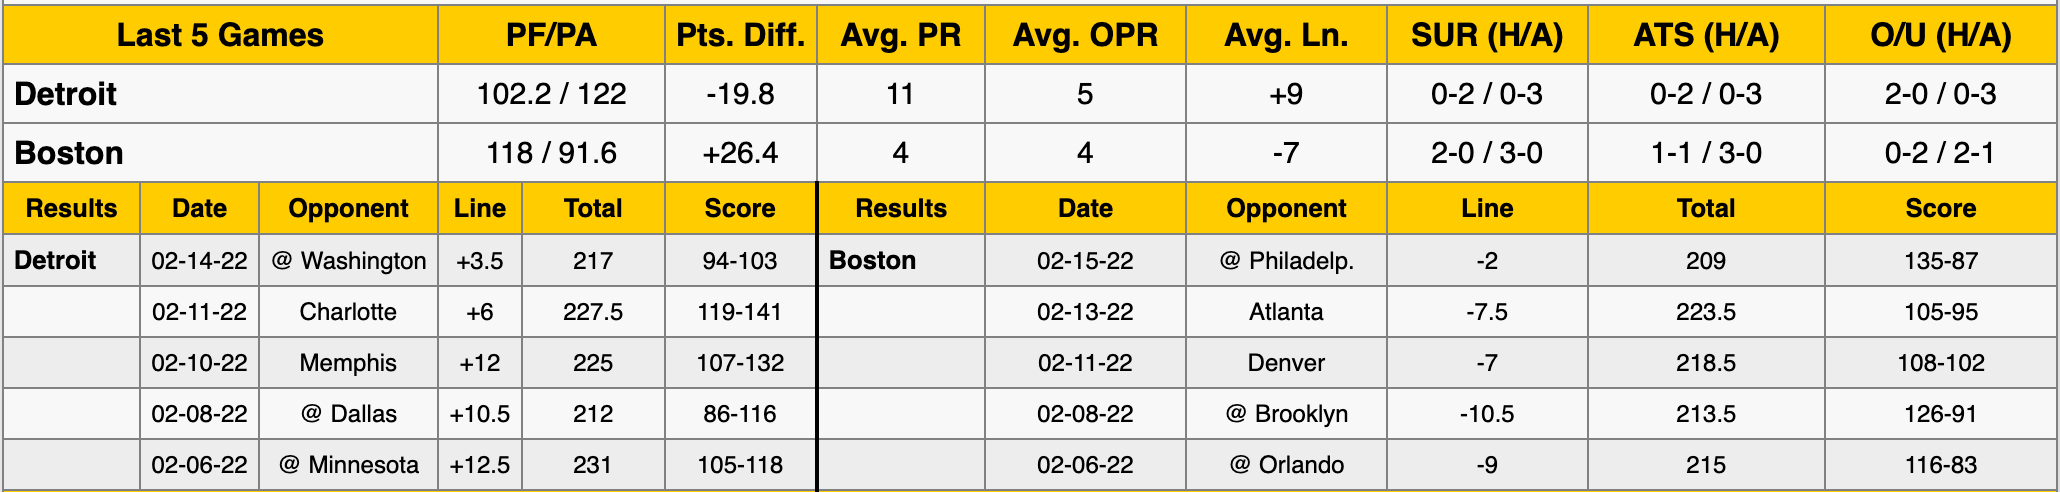 Detroit Pistons at Boston Celtics Data